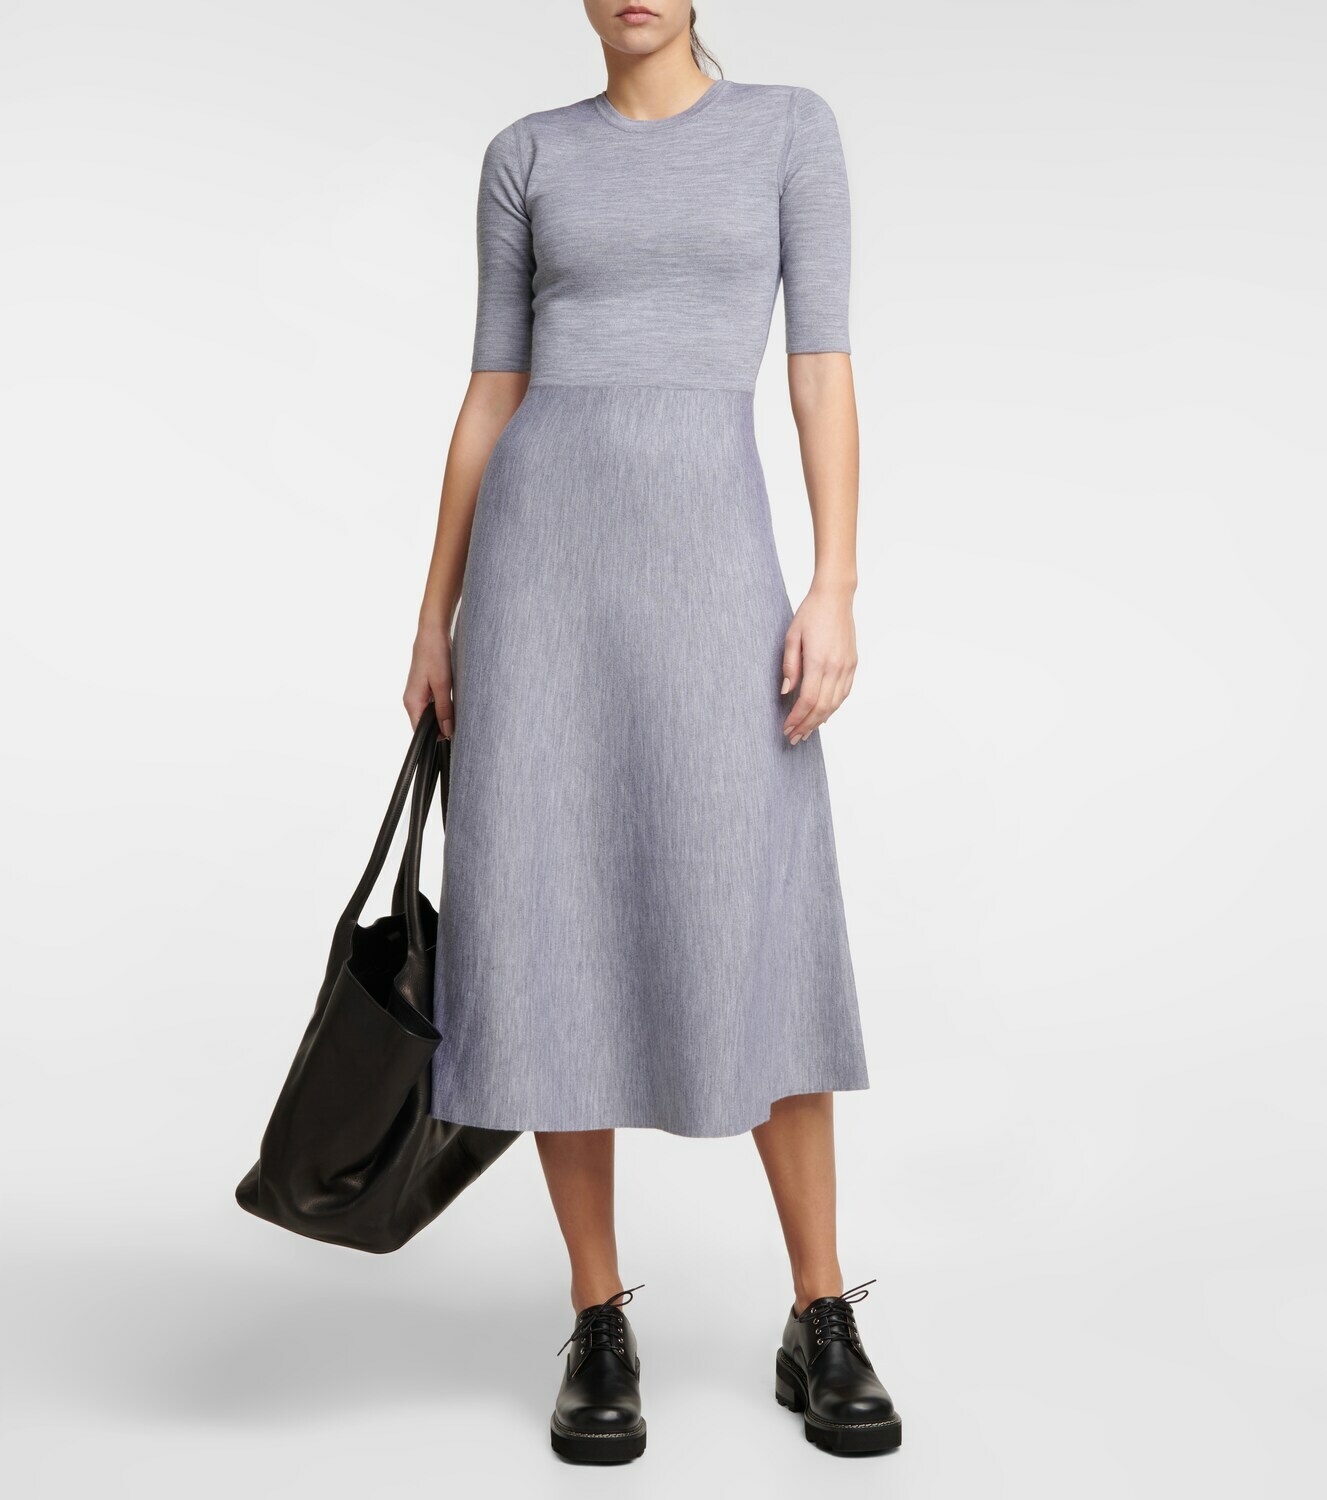 Gabriela Hearst - Seymore wool, cashmere and silk dress Gabriela Hearst